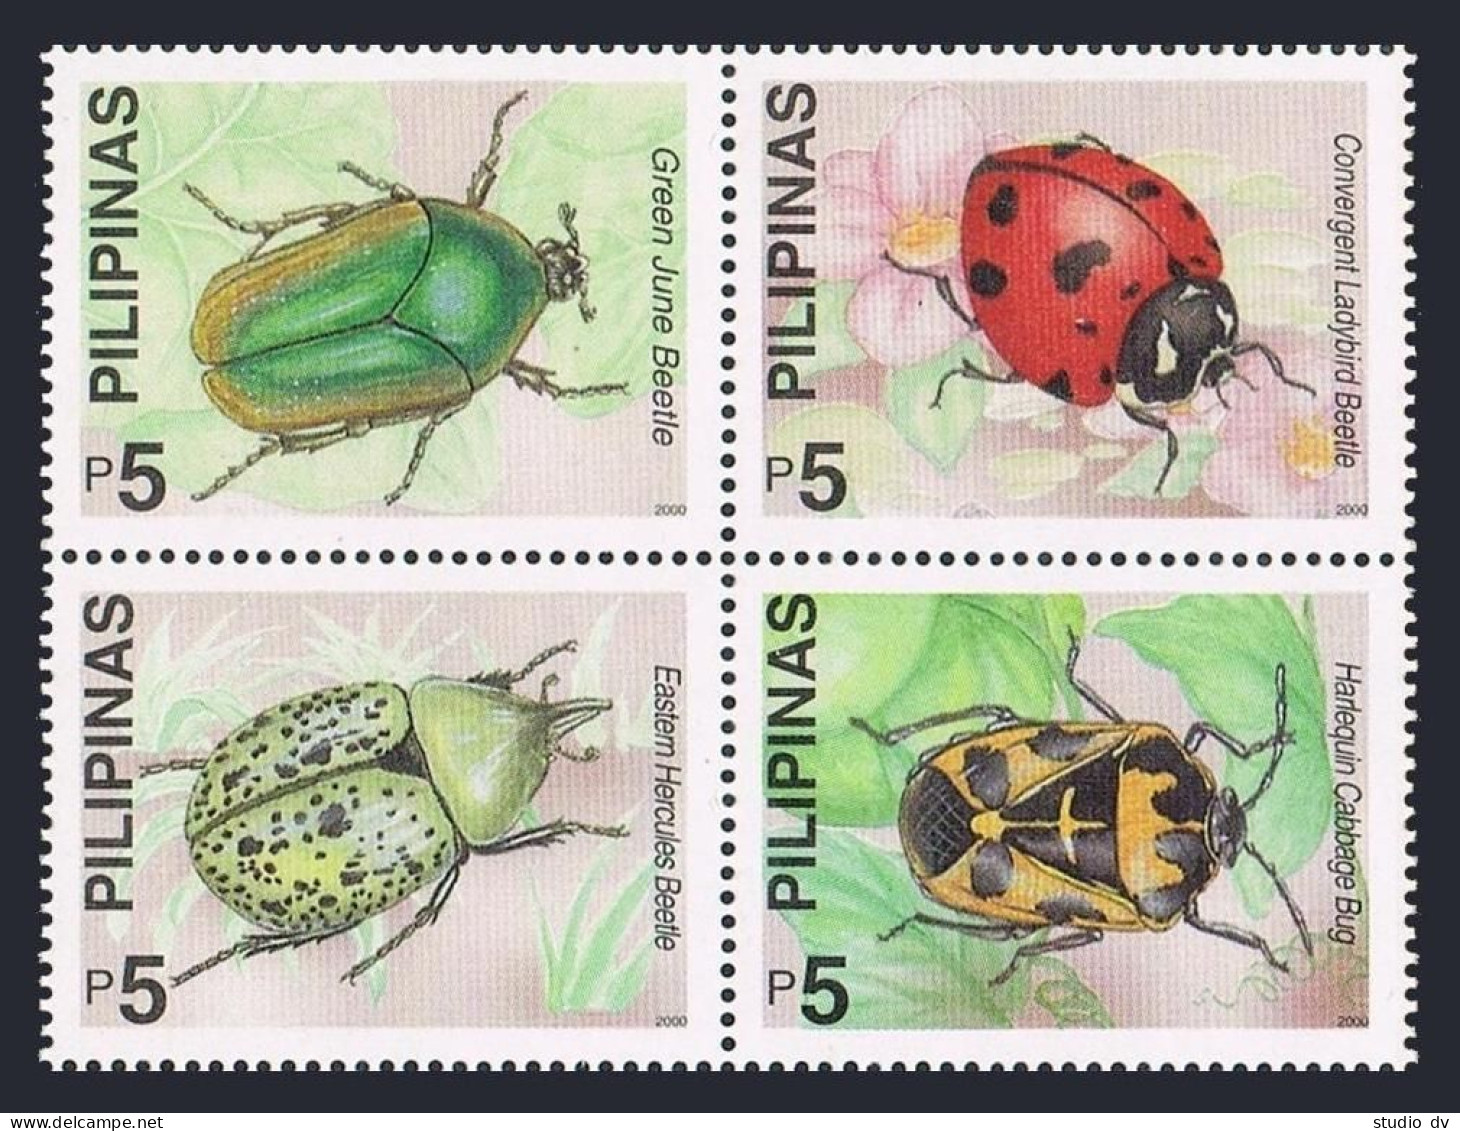 Philippines 2677ad-2678ad,2677e-2678e,MNH. Beetles,2000.Green Jule,Ladybirds, - Philippinen